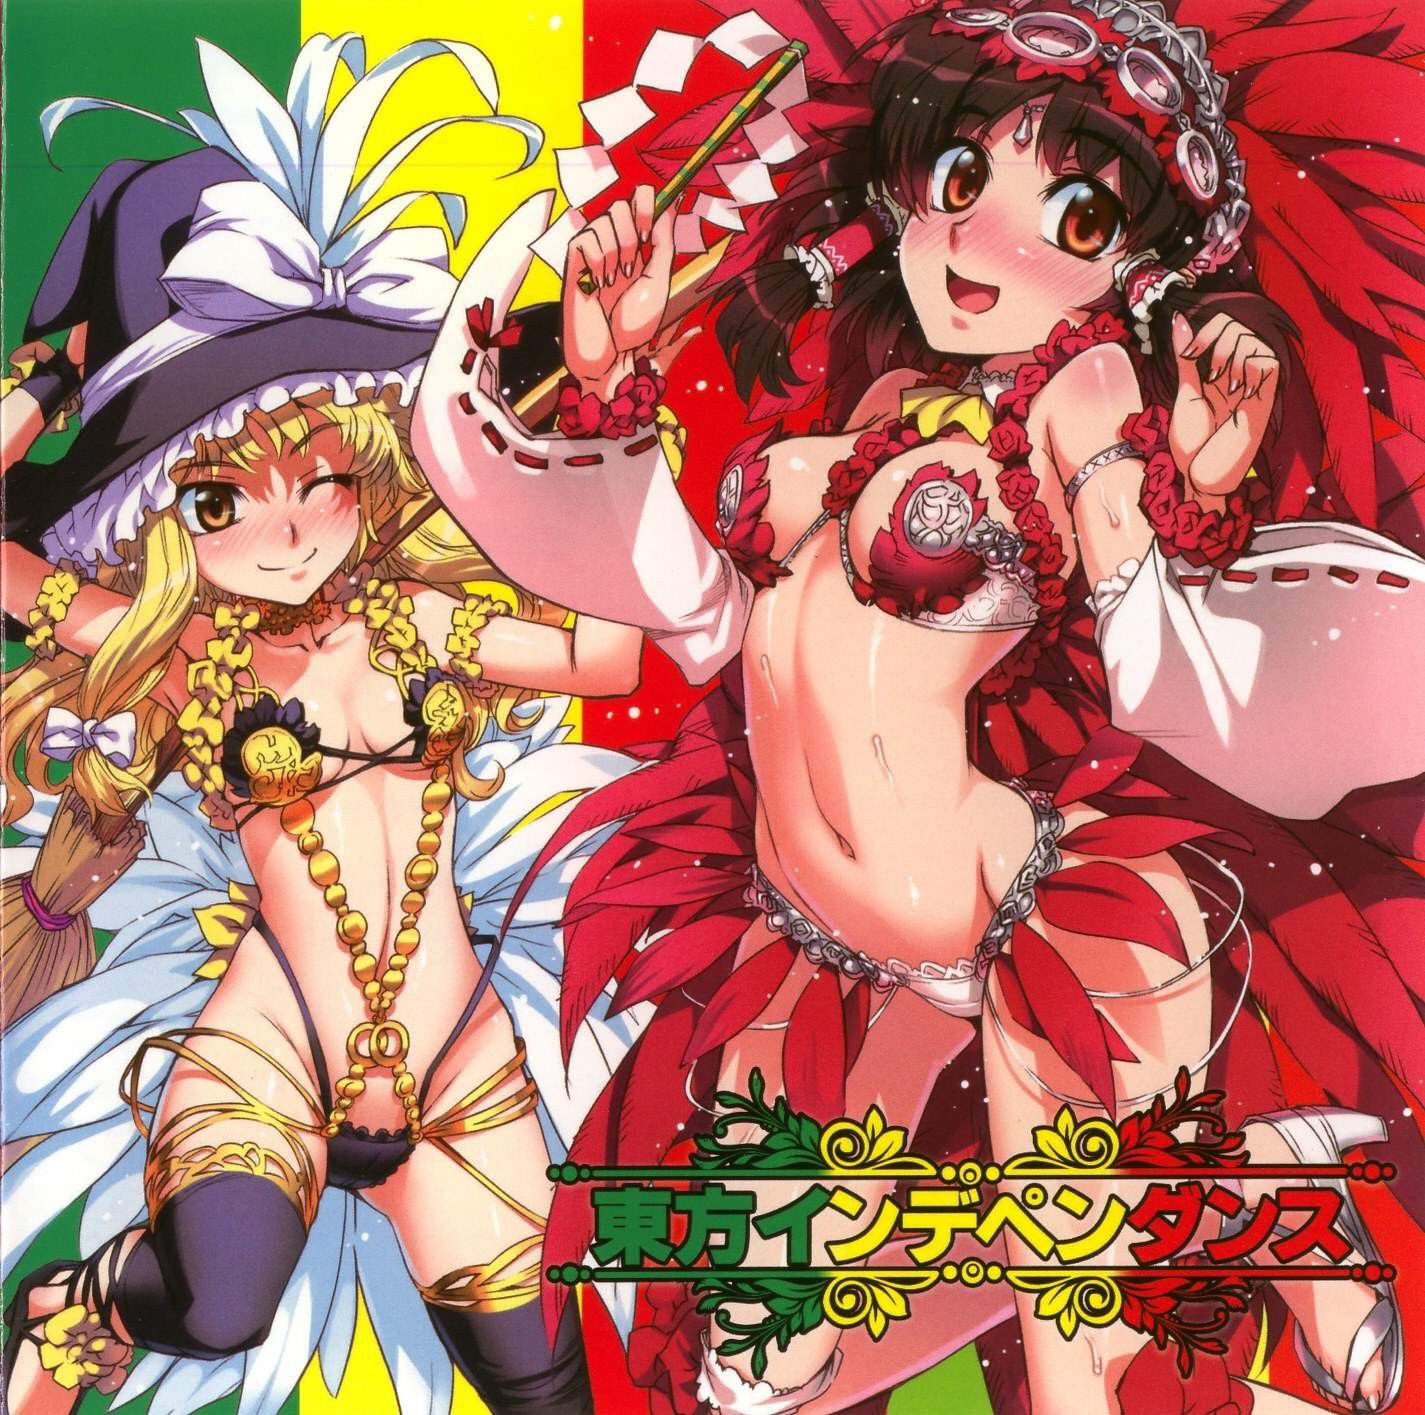 Secondary erotic images of girls wearing erotic underwear and costume 13 [Naughty Shitagi] 3